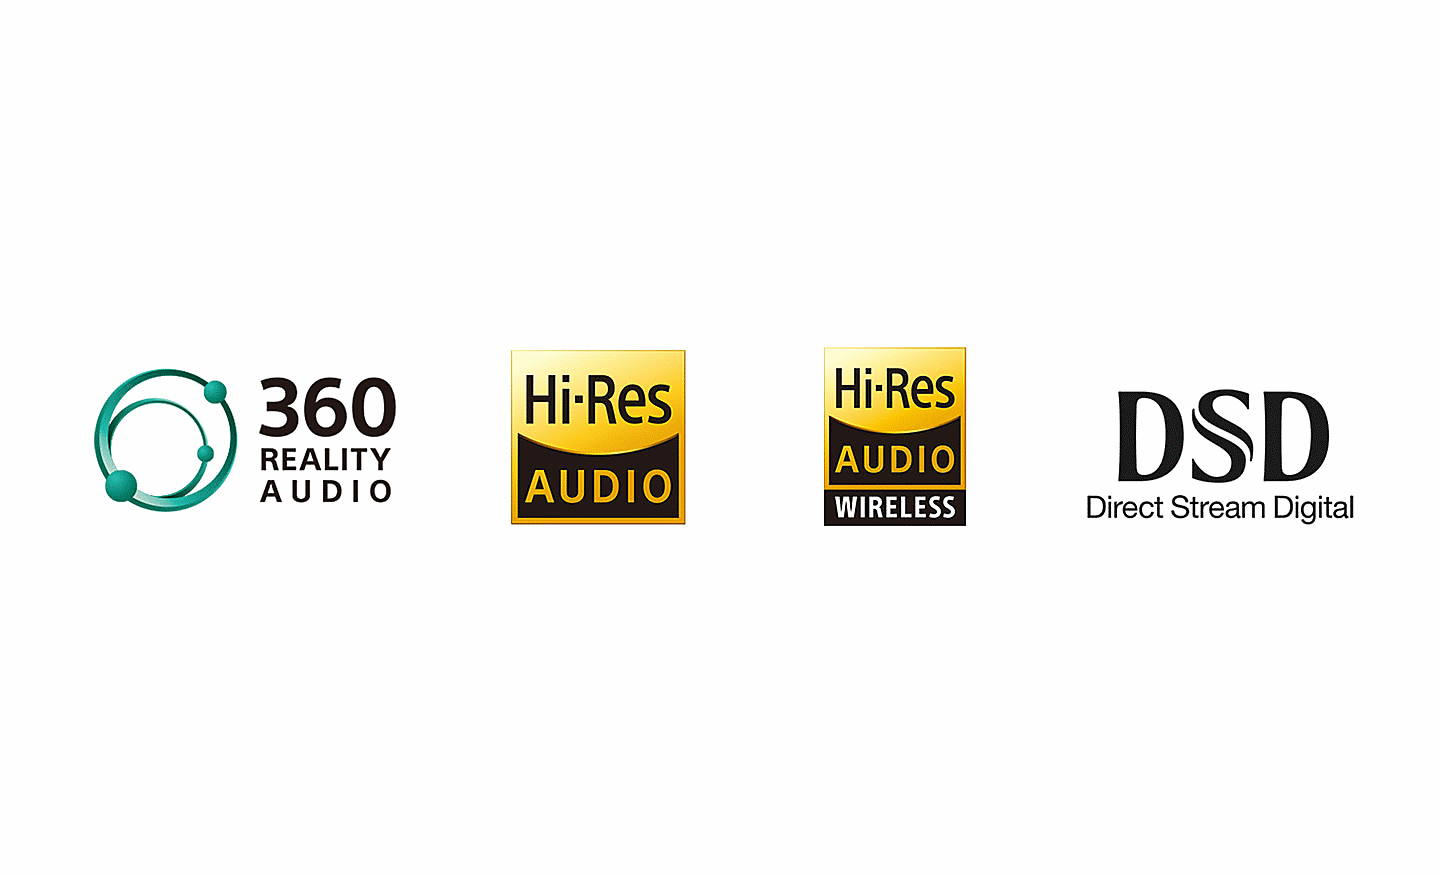 Logos 360 Reality Audio, Hi-Res Audio, Hi-Res Audio sans fil et DSD Direct Stream Digital